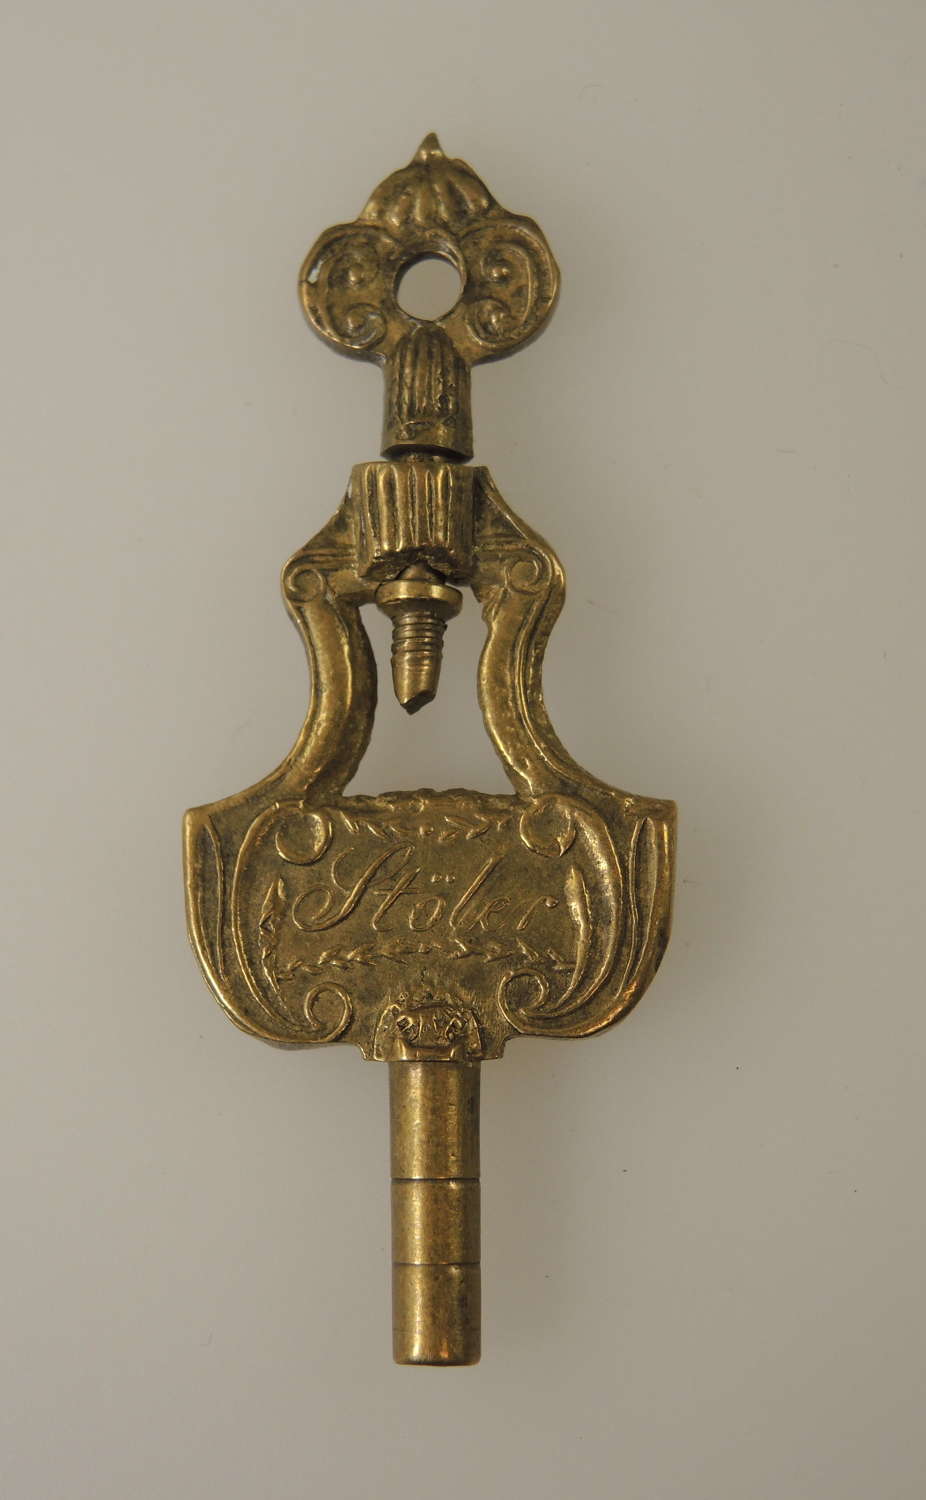 Early French gilt pocket watch key c1790